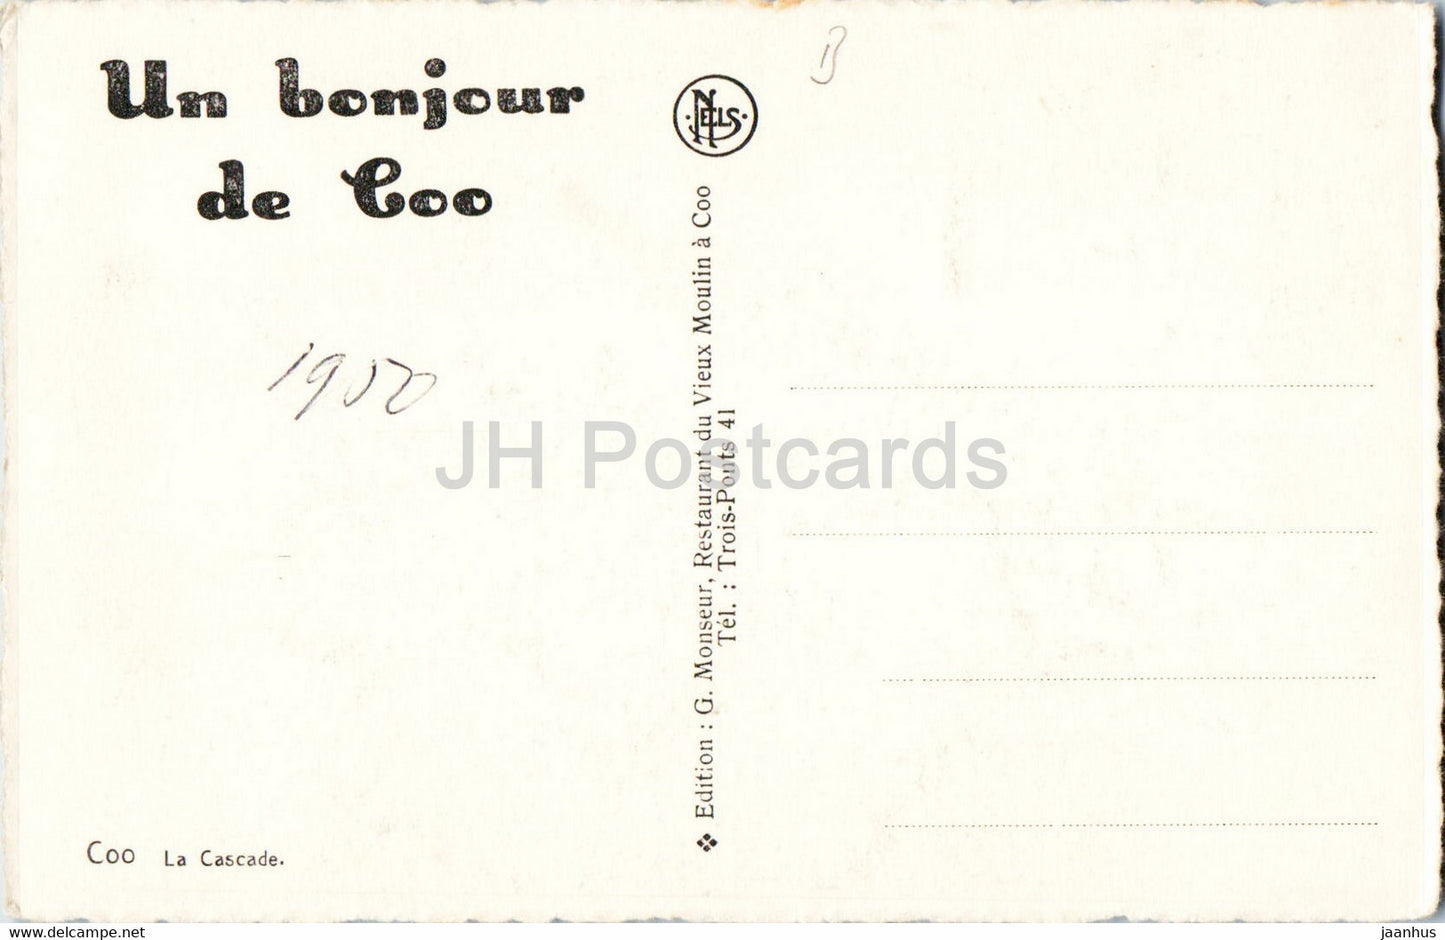 Coo - La Cascade - carte postale ancienne - Belgique - occasion